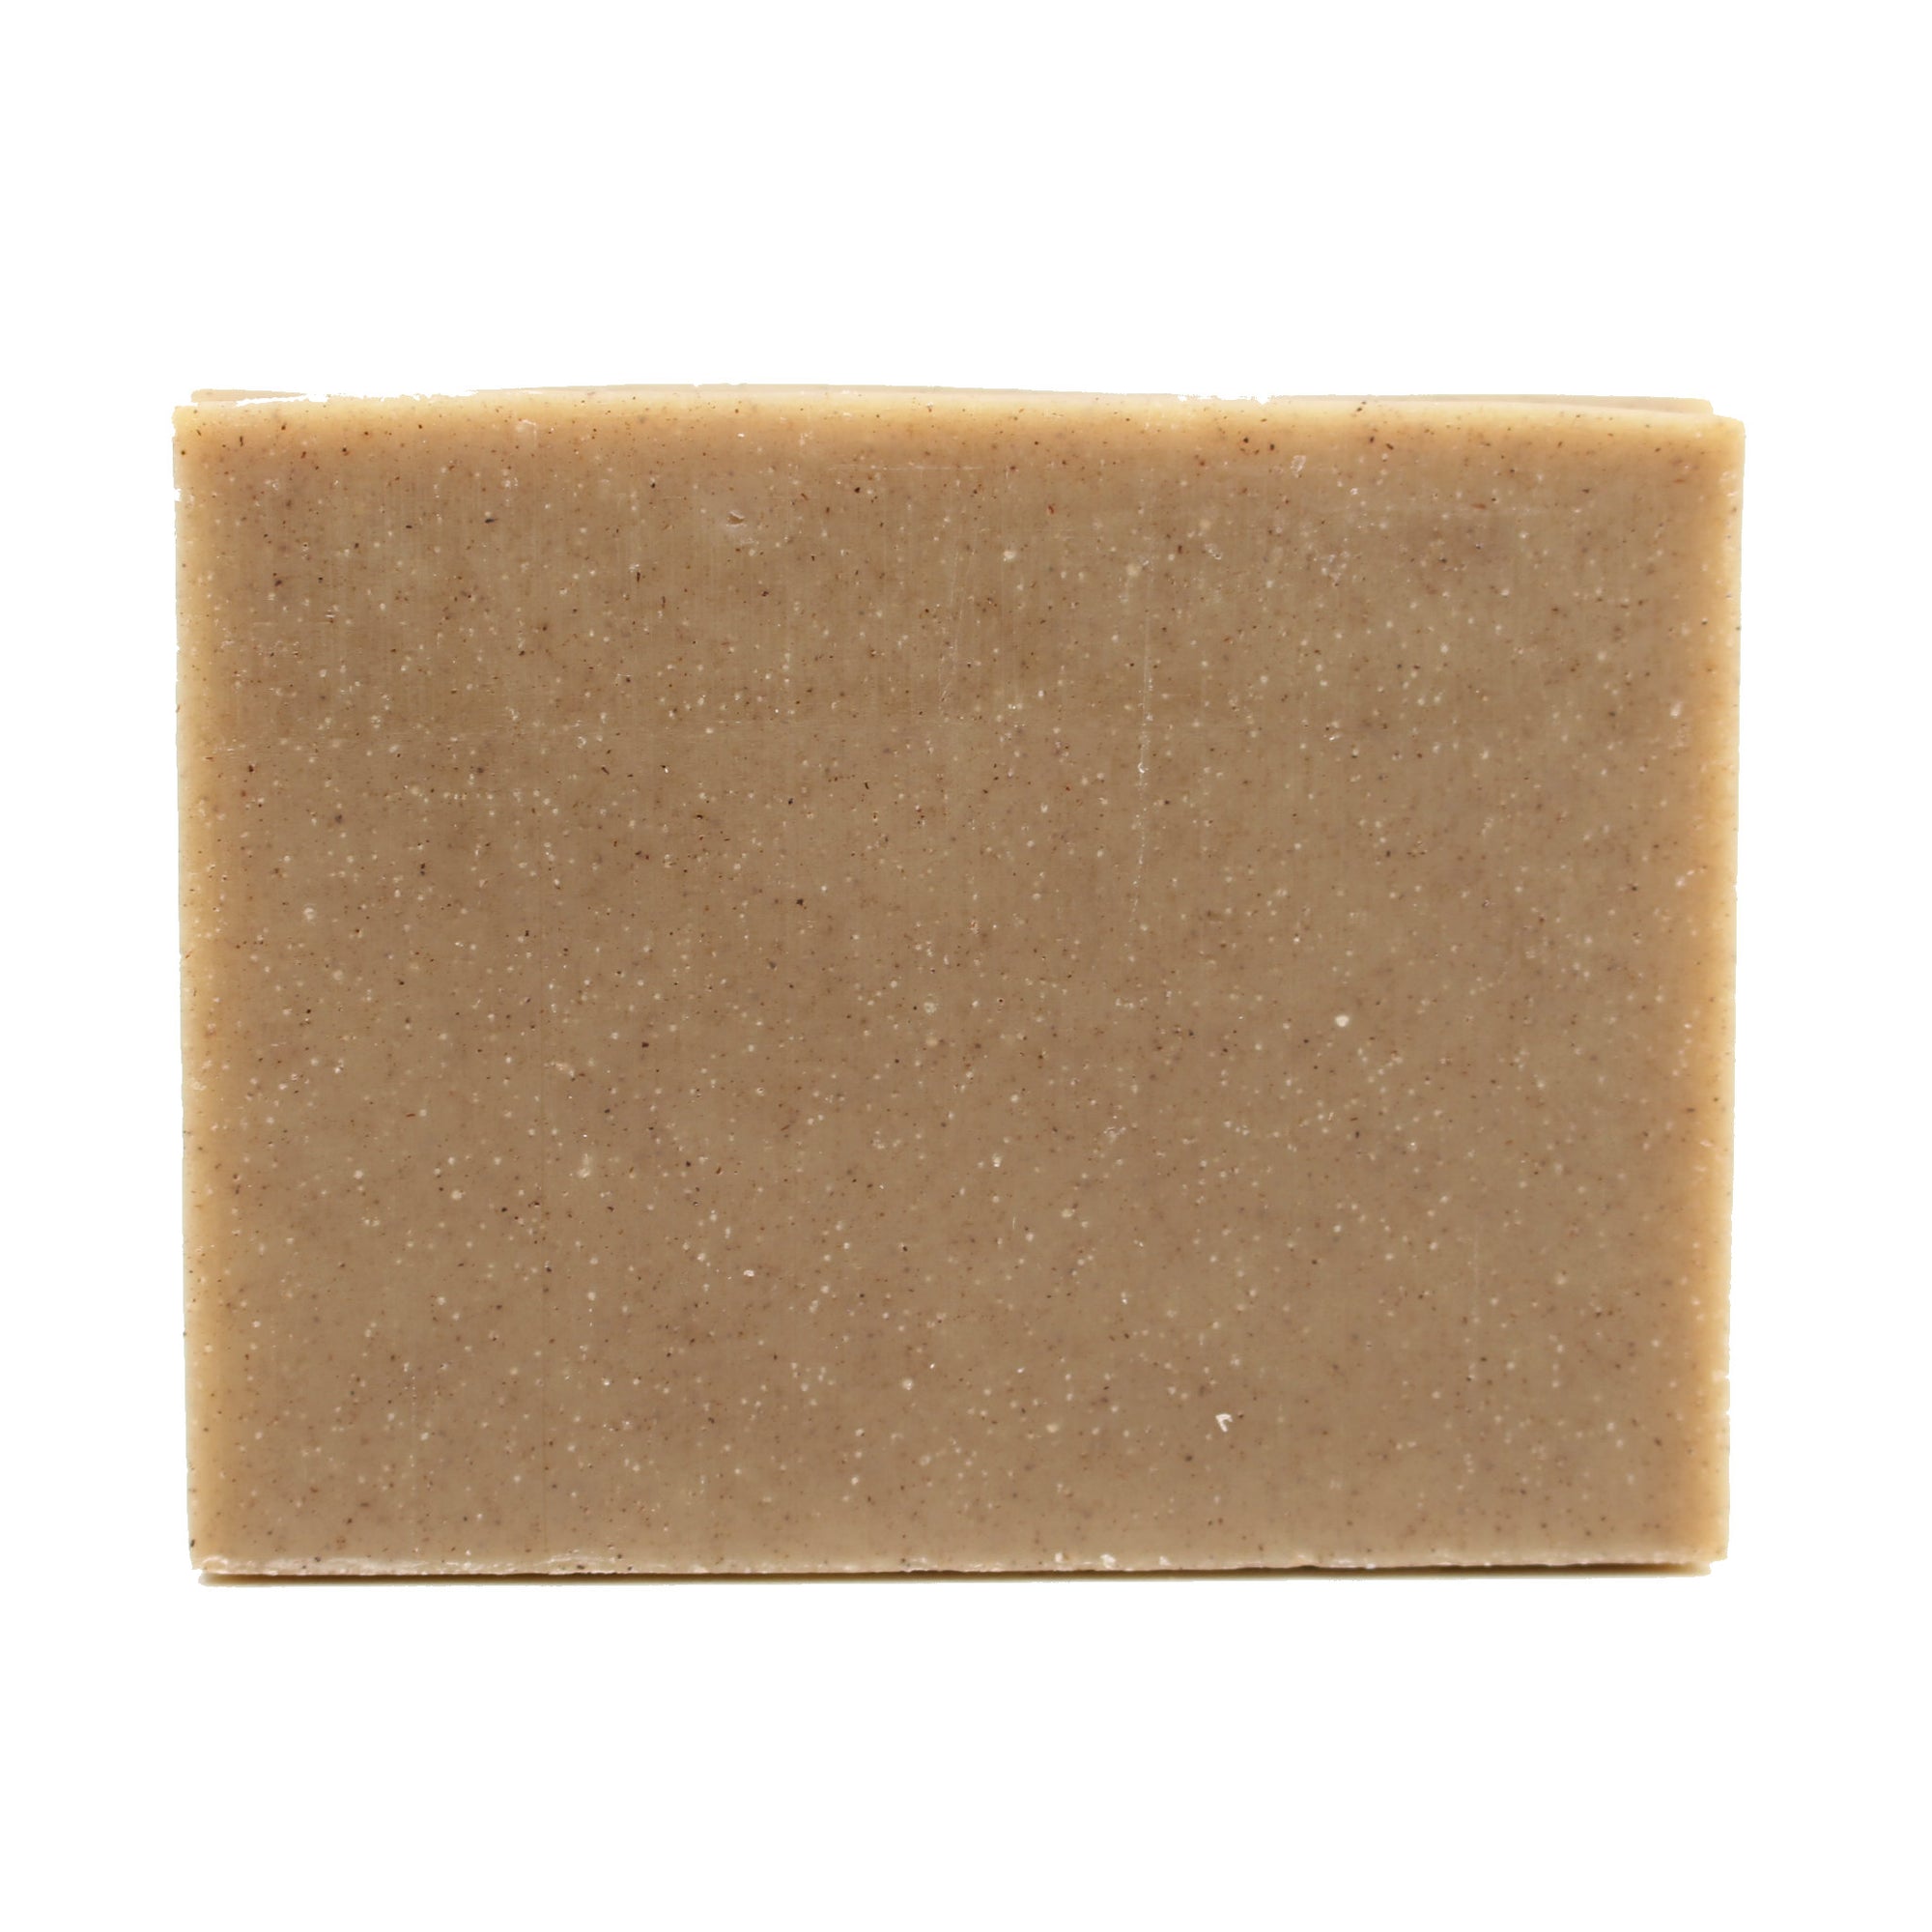 Aum Patchouli essential oil organic bar soap from Ground Soap unwrapped closeup. 